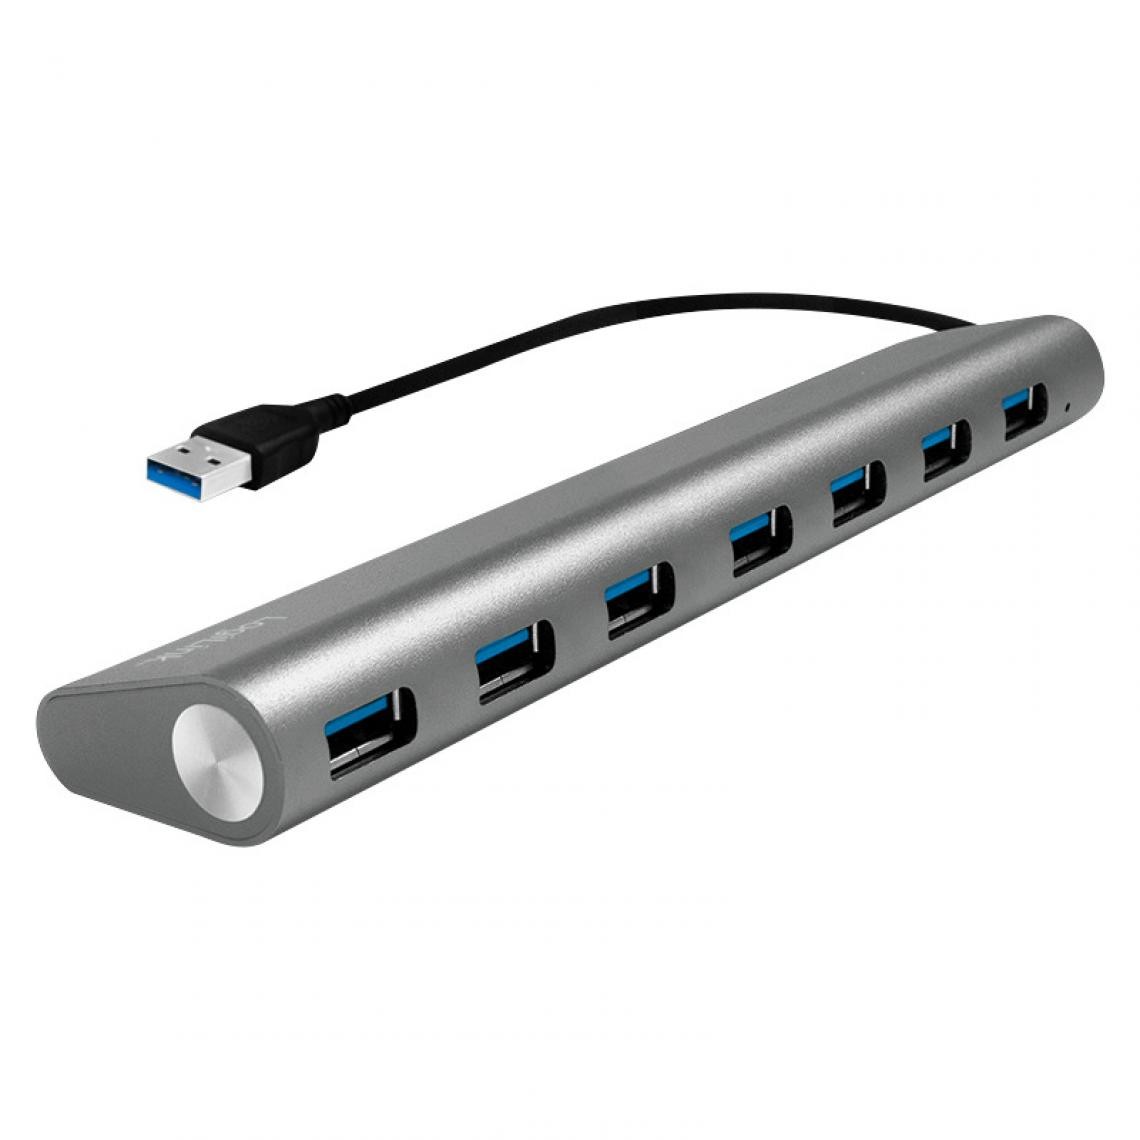 Logilink - LogiLink Hub USB 3.0, 7 ports, boîtier en aluminium, gris () - Hub